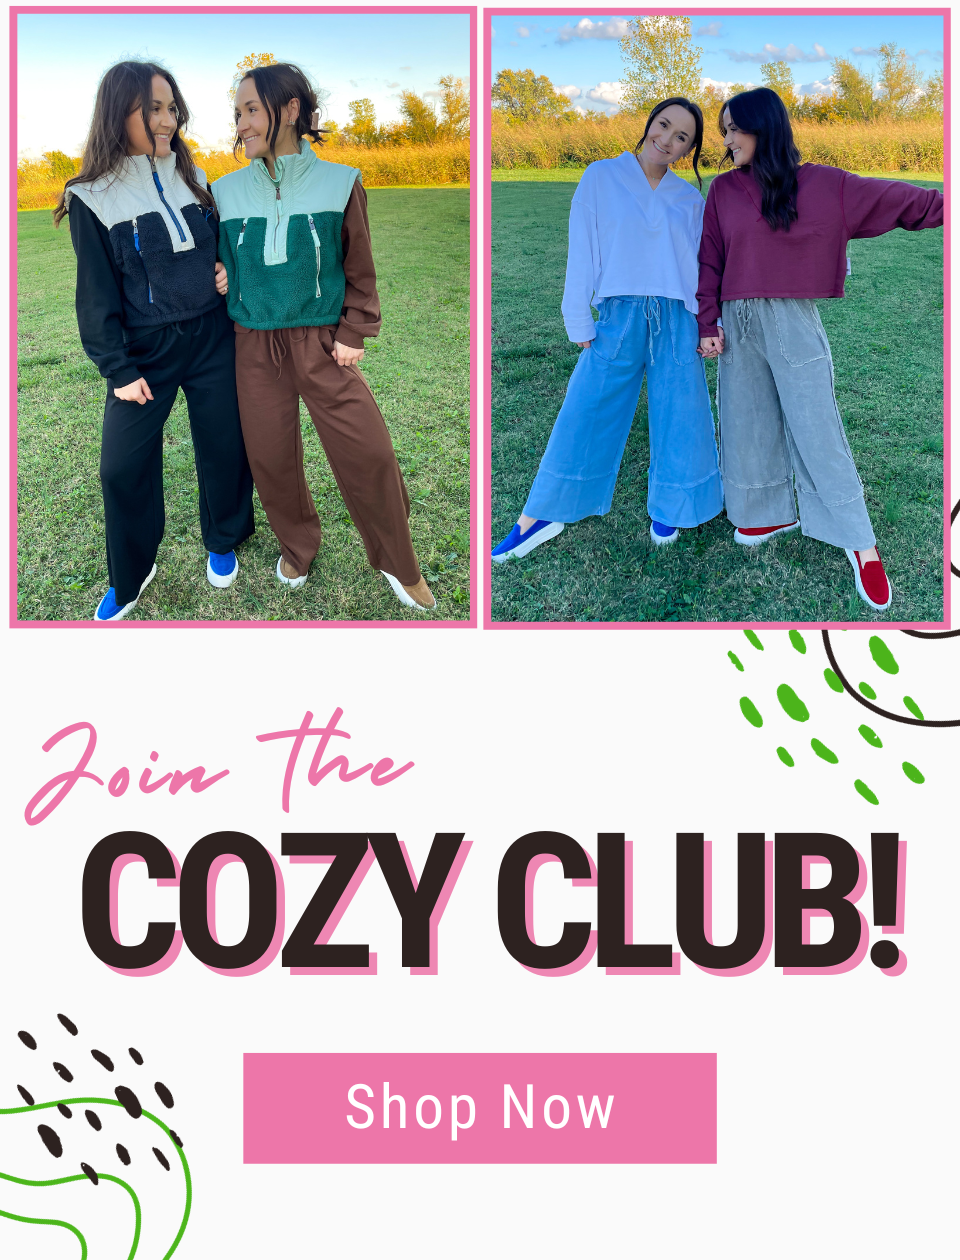 💚🤎💚  Club hairstyles, Club design, Club outfits